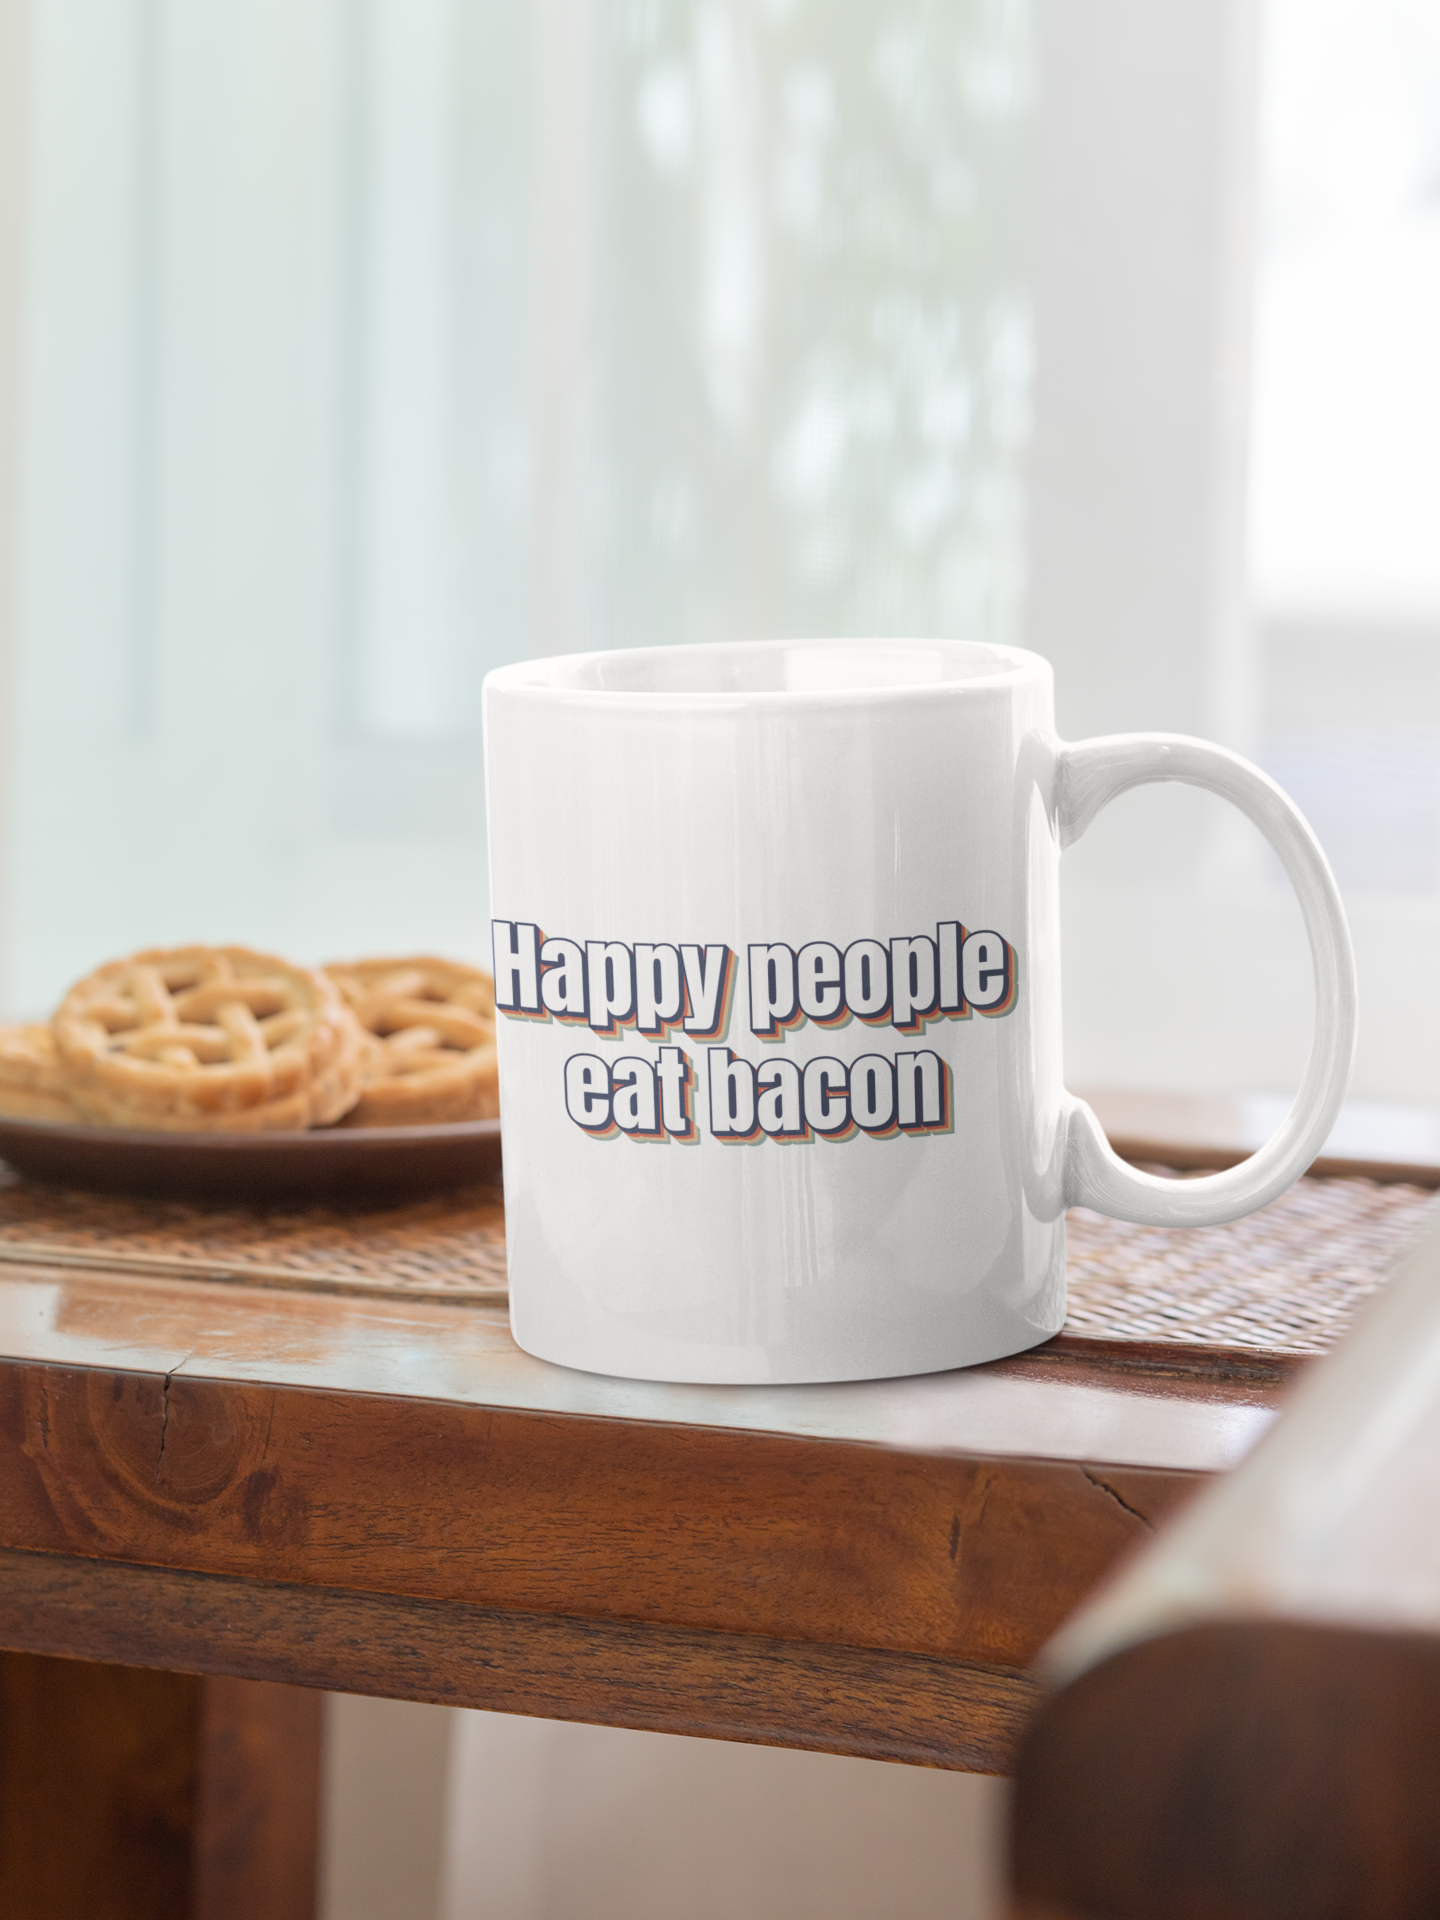 Happy people eat bacon - White glossy mug